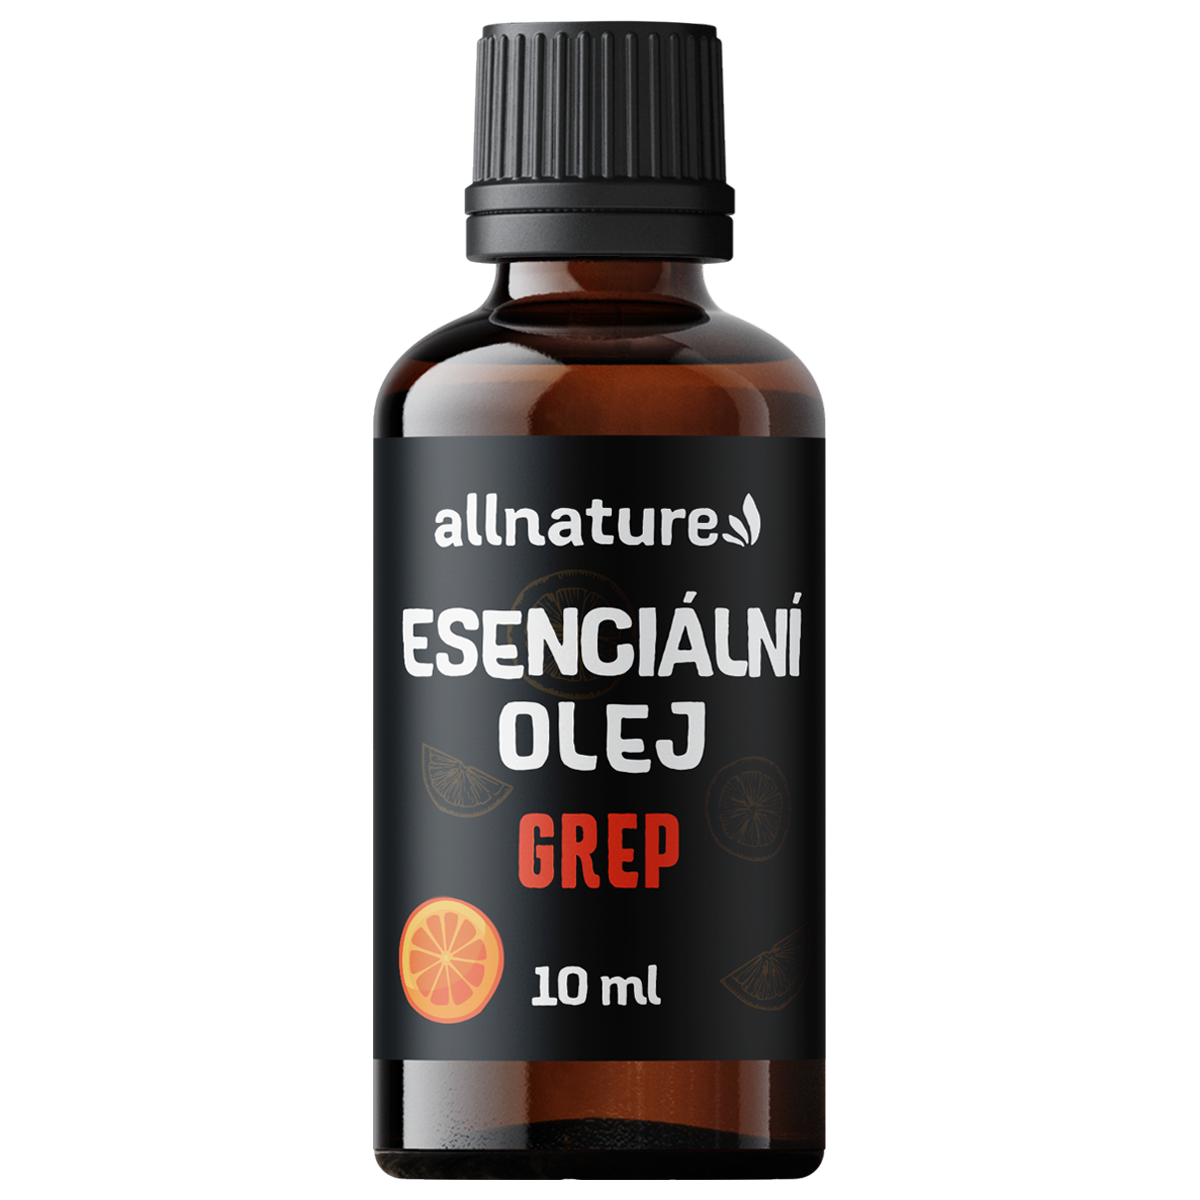 Allnature Esenciální olej Grep (10 ml) - snižuje napětí a detoxikuje